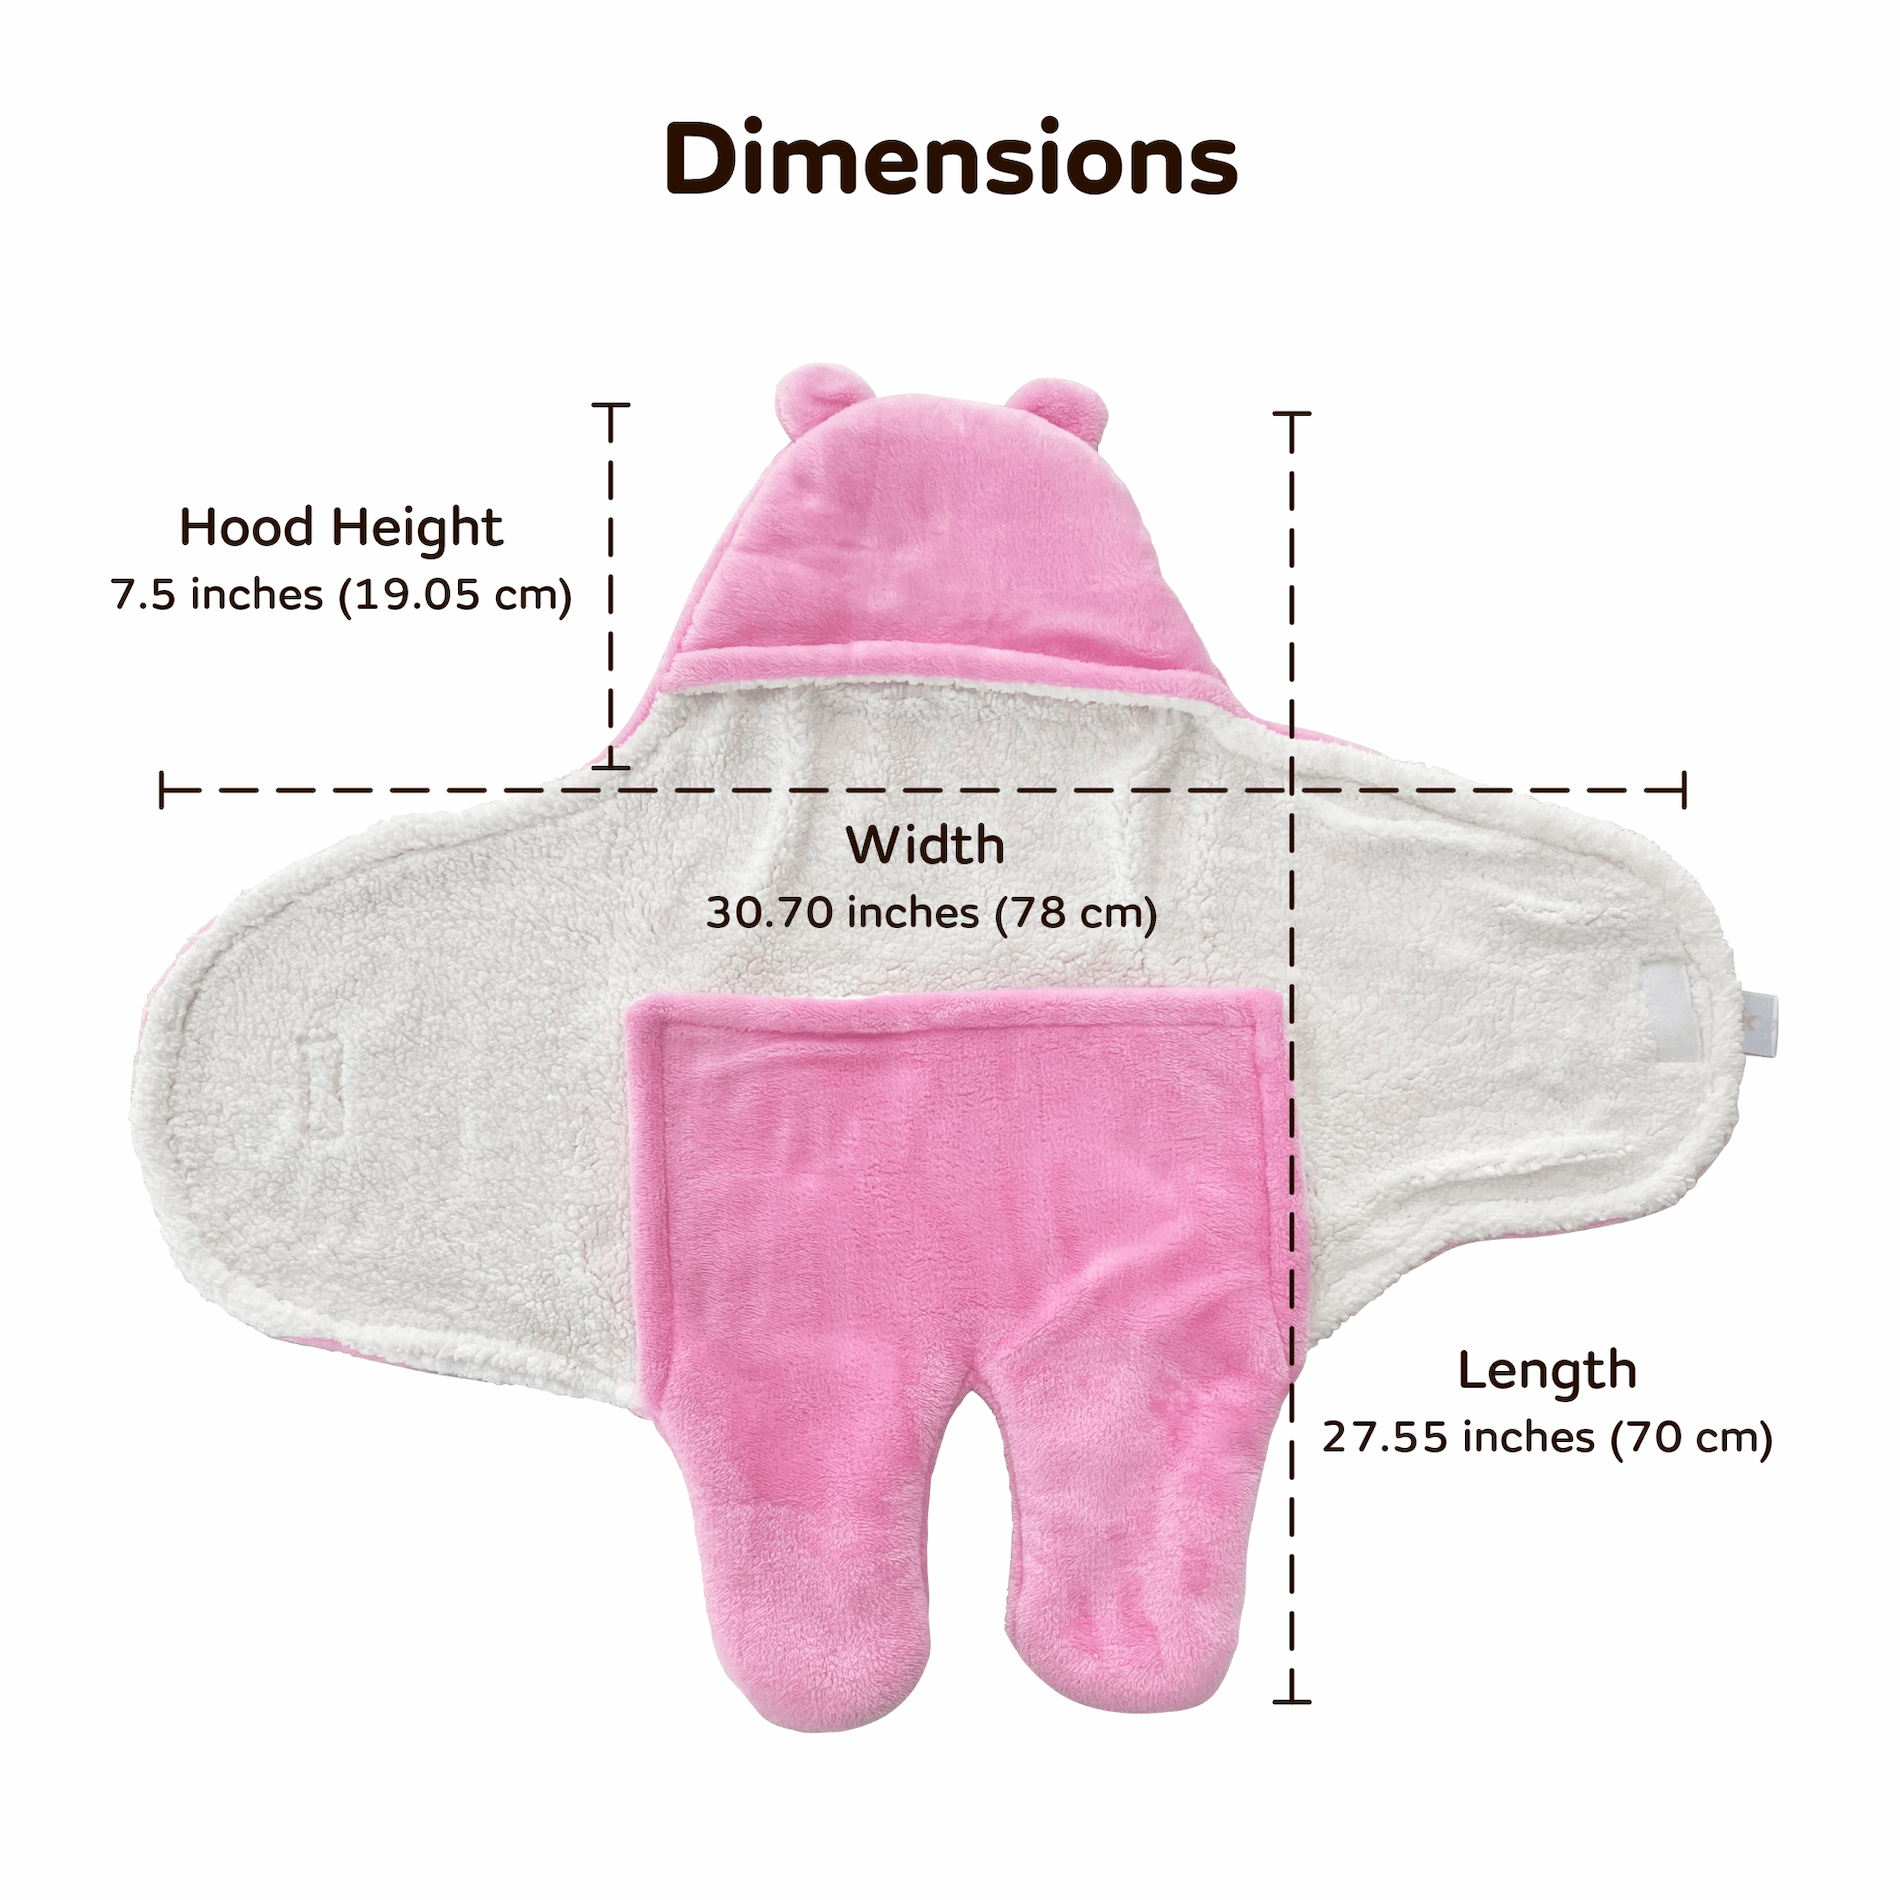 Mylo Ultra-soft Cute Baby Swaddling Wrapper, Sleeping Bag cum All season Ac Blanket (0-6 Months) - Light Pink